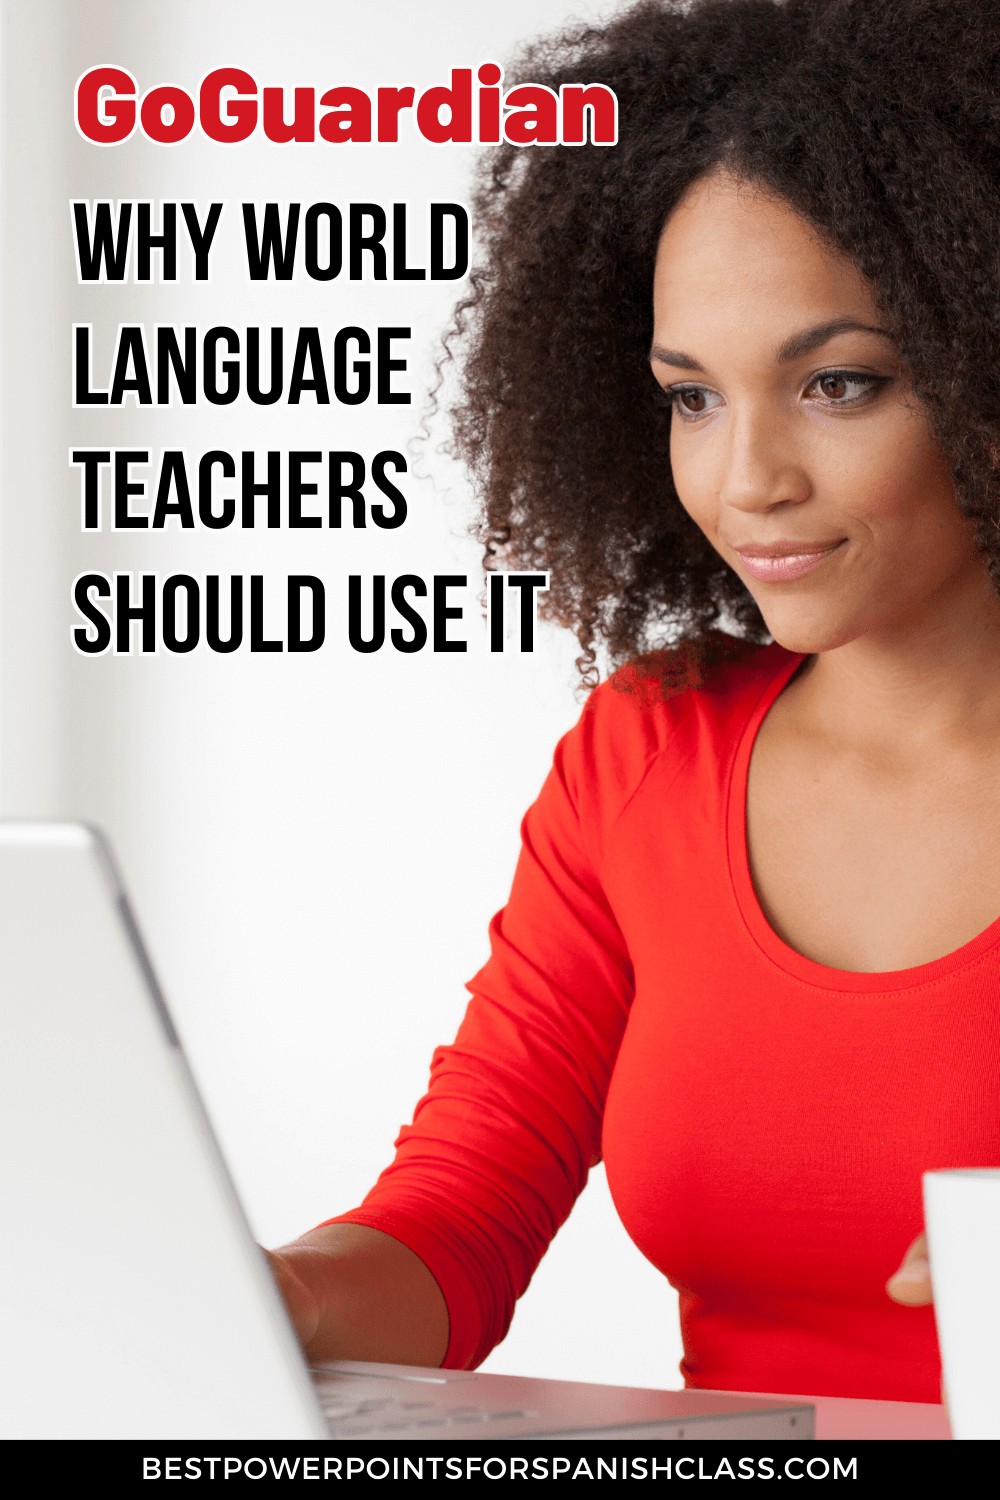 Go Guardian: Why World Language Teachers Should Use It